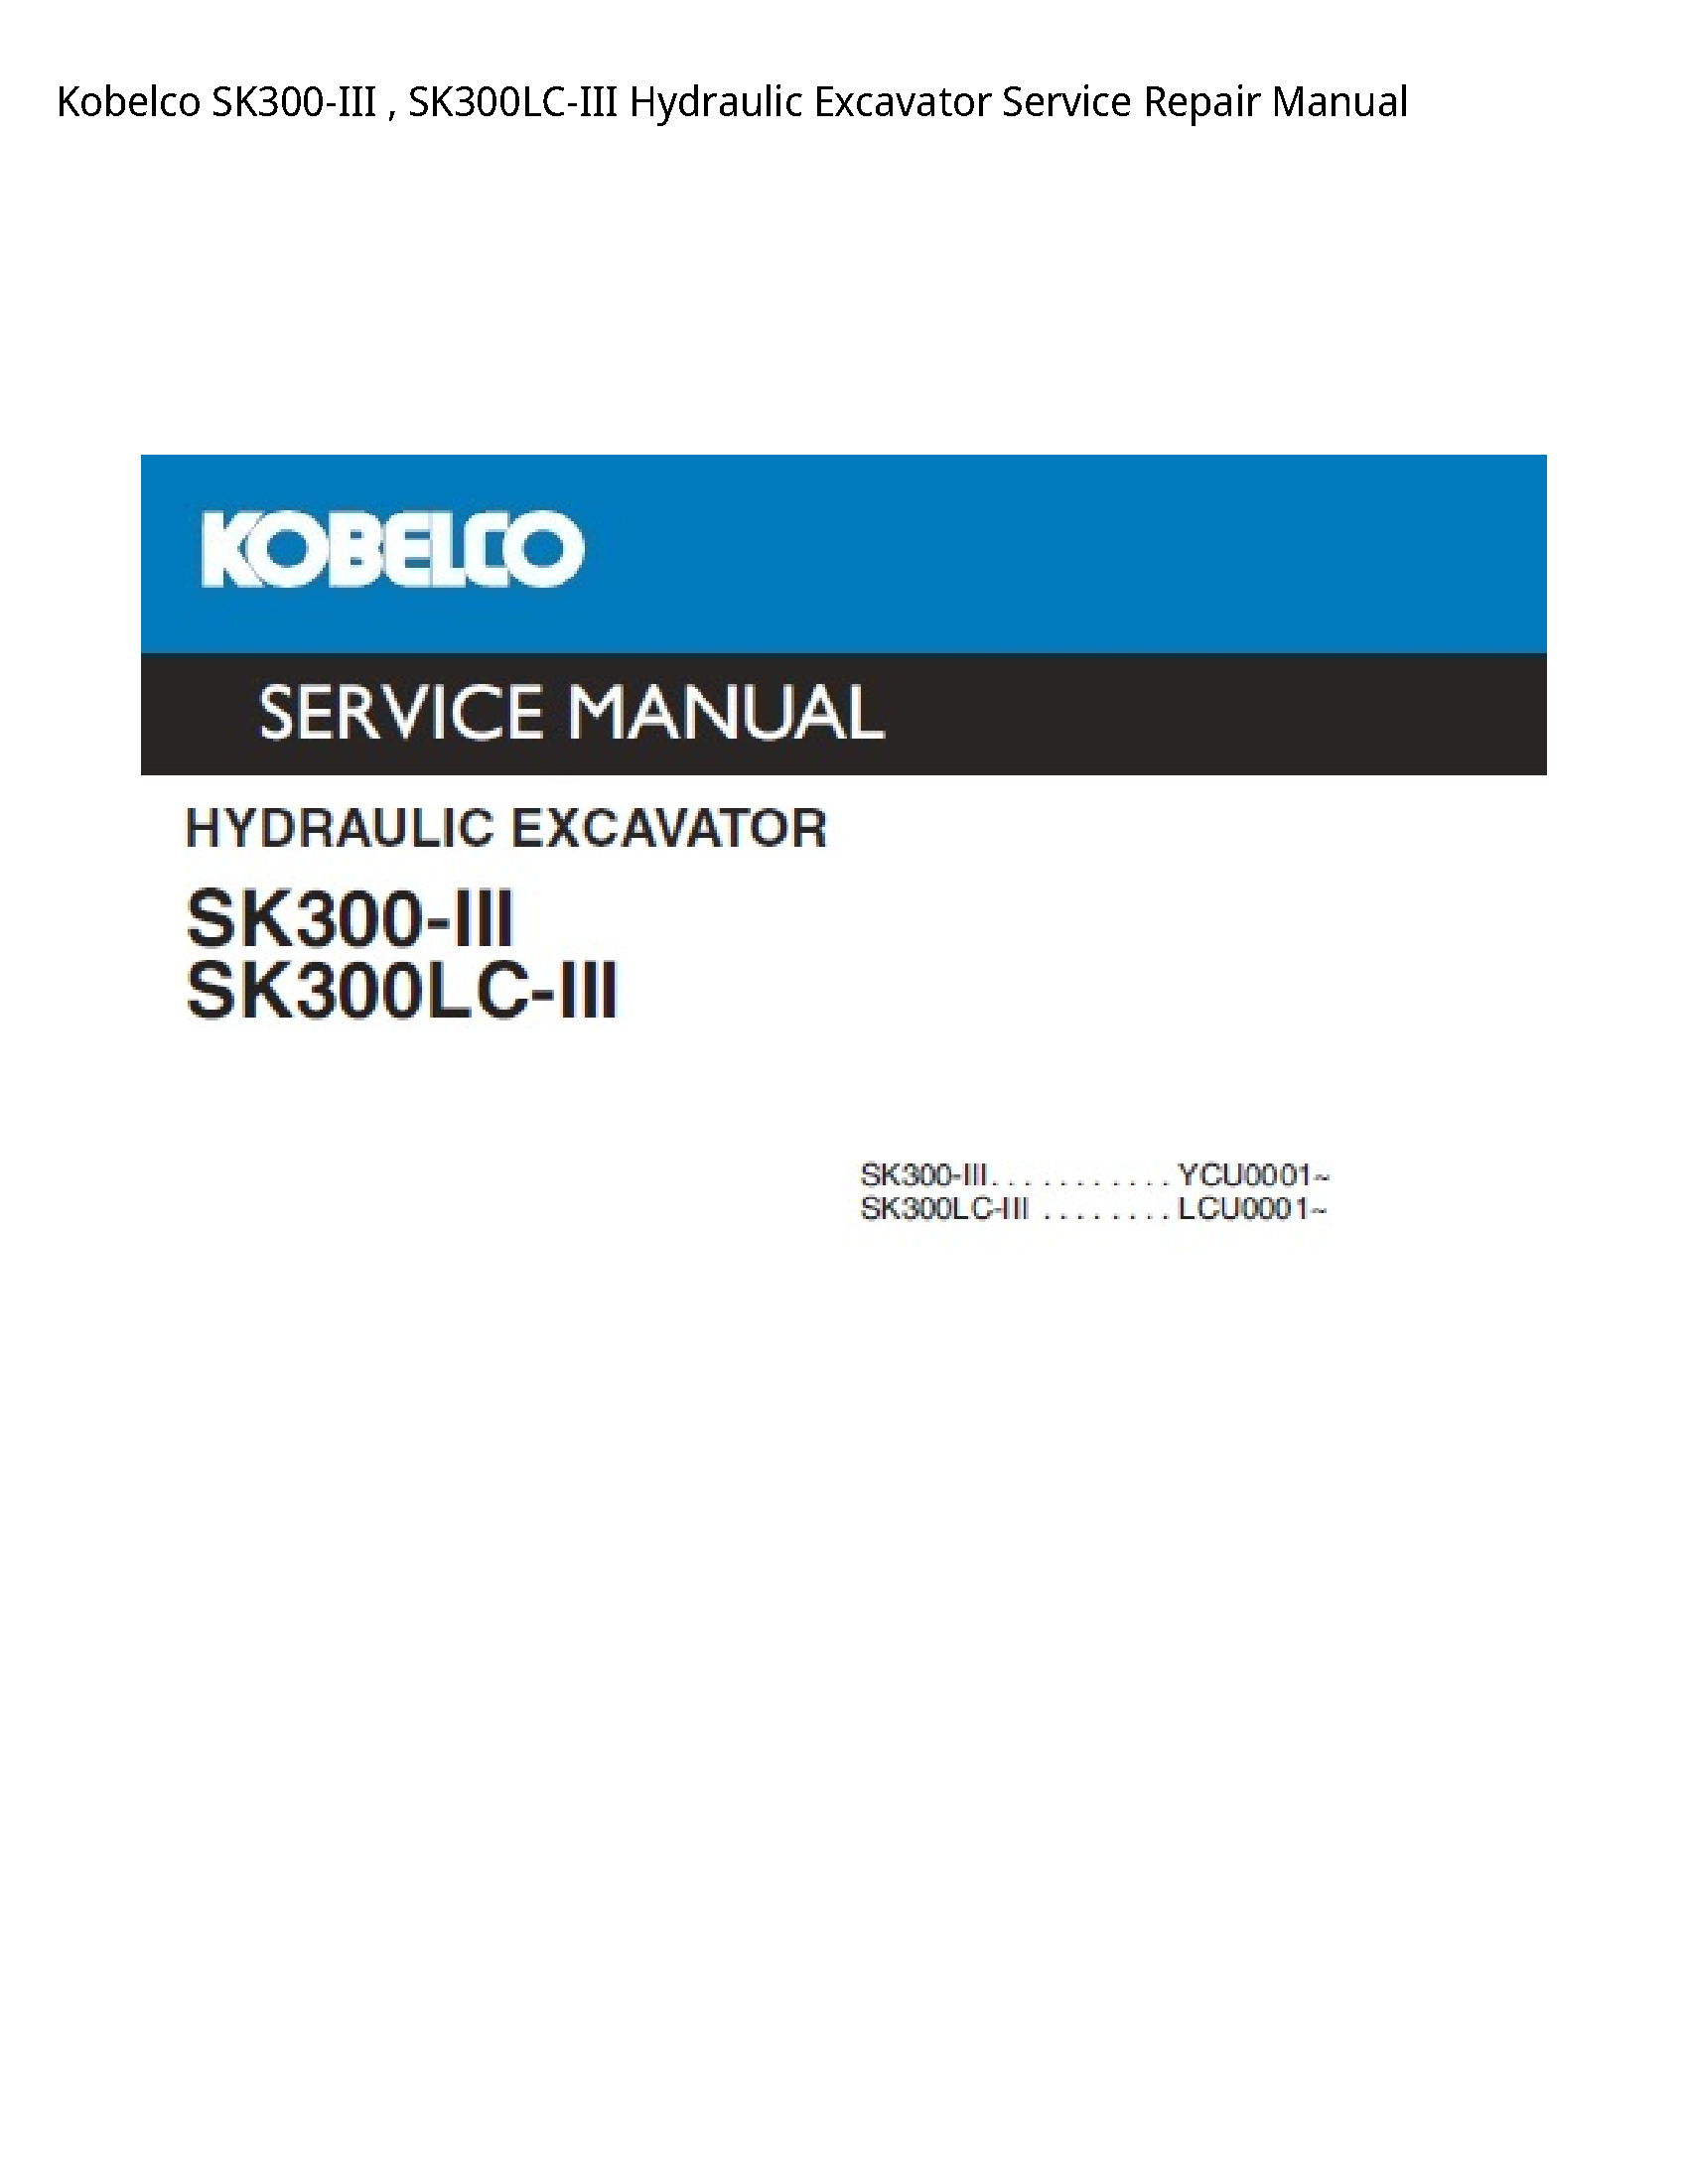 Kobelco SK300-III Hydraulic Excavator manual